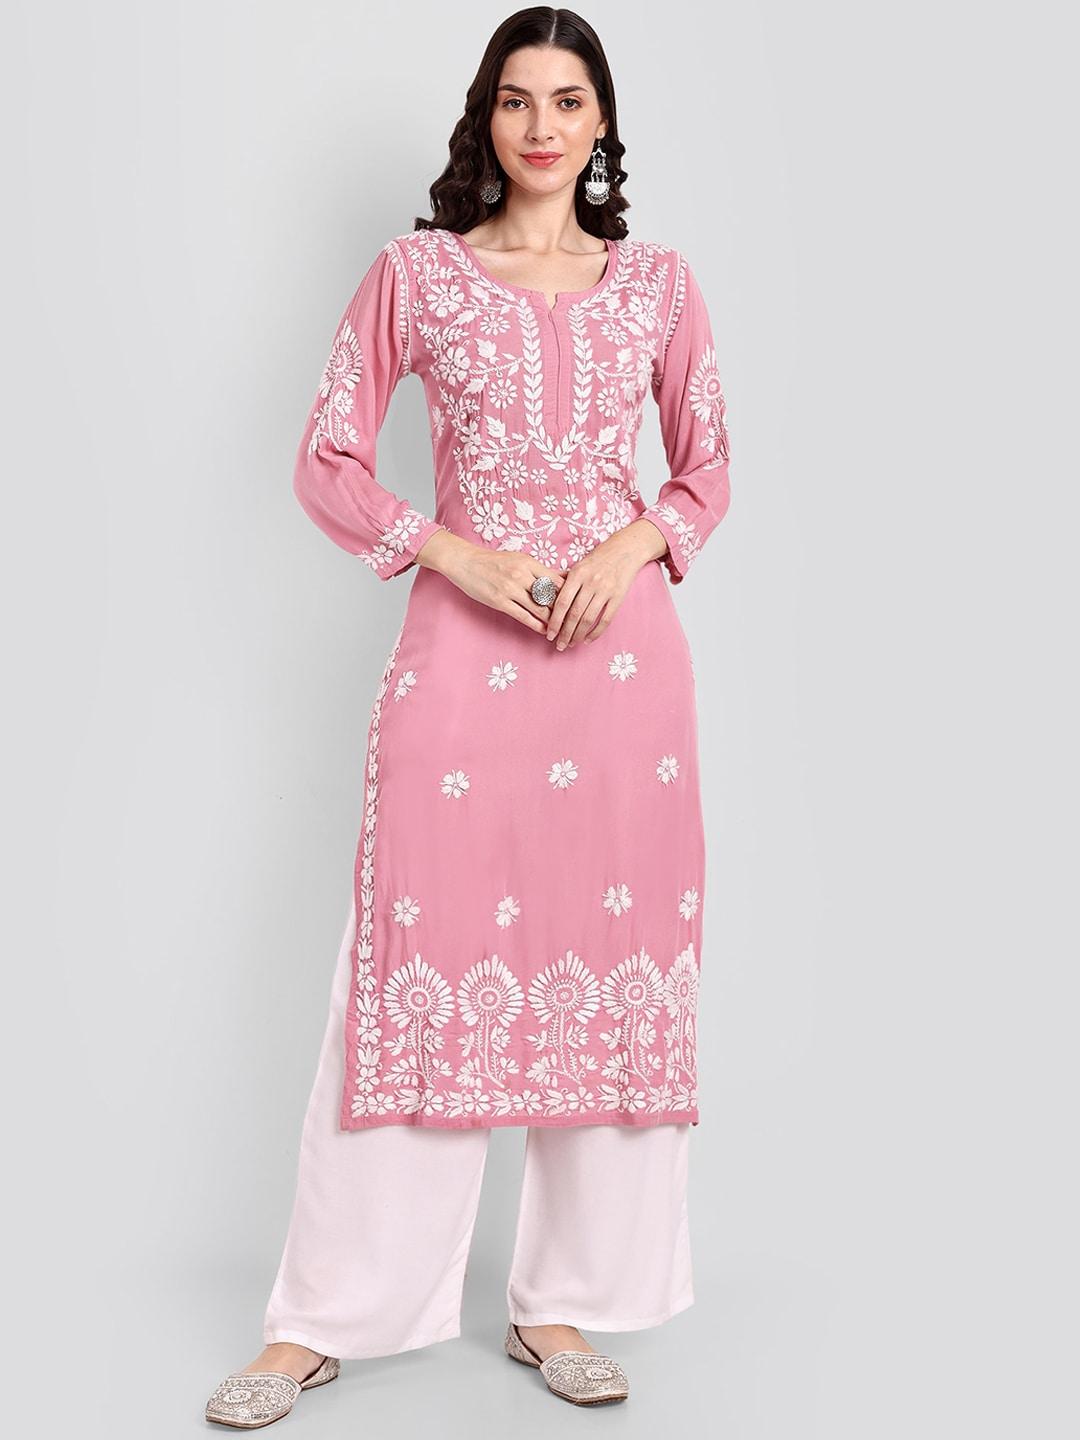 seva-chikan-women-pink-ethnic-motifs-embroidered-chikankari-floral-handloom-kurta